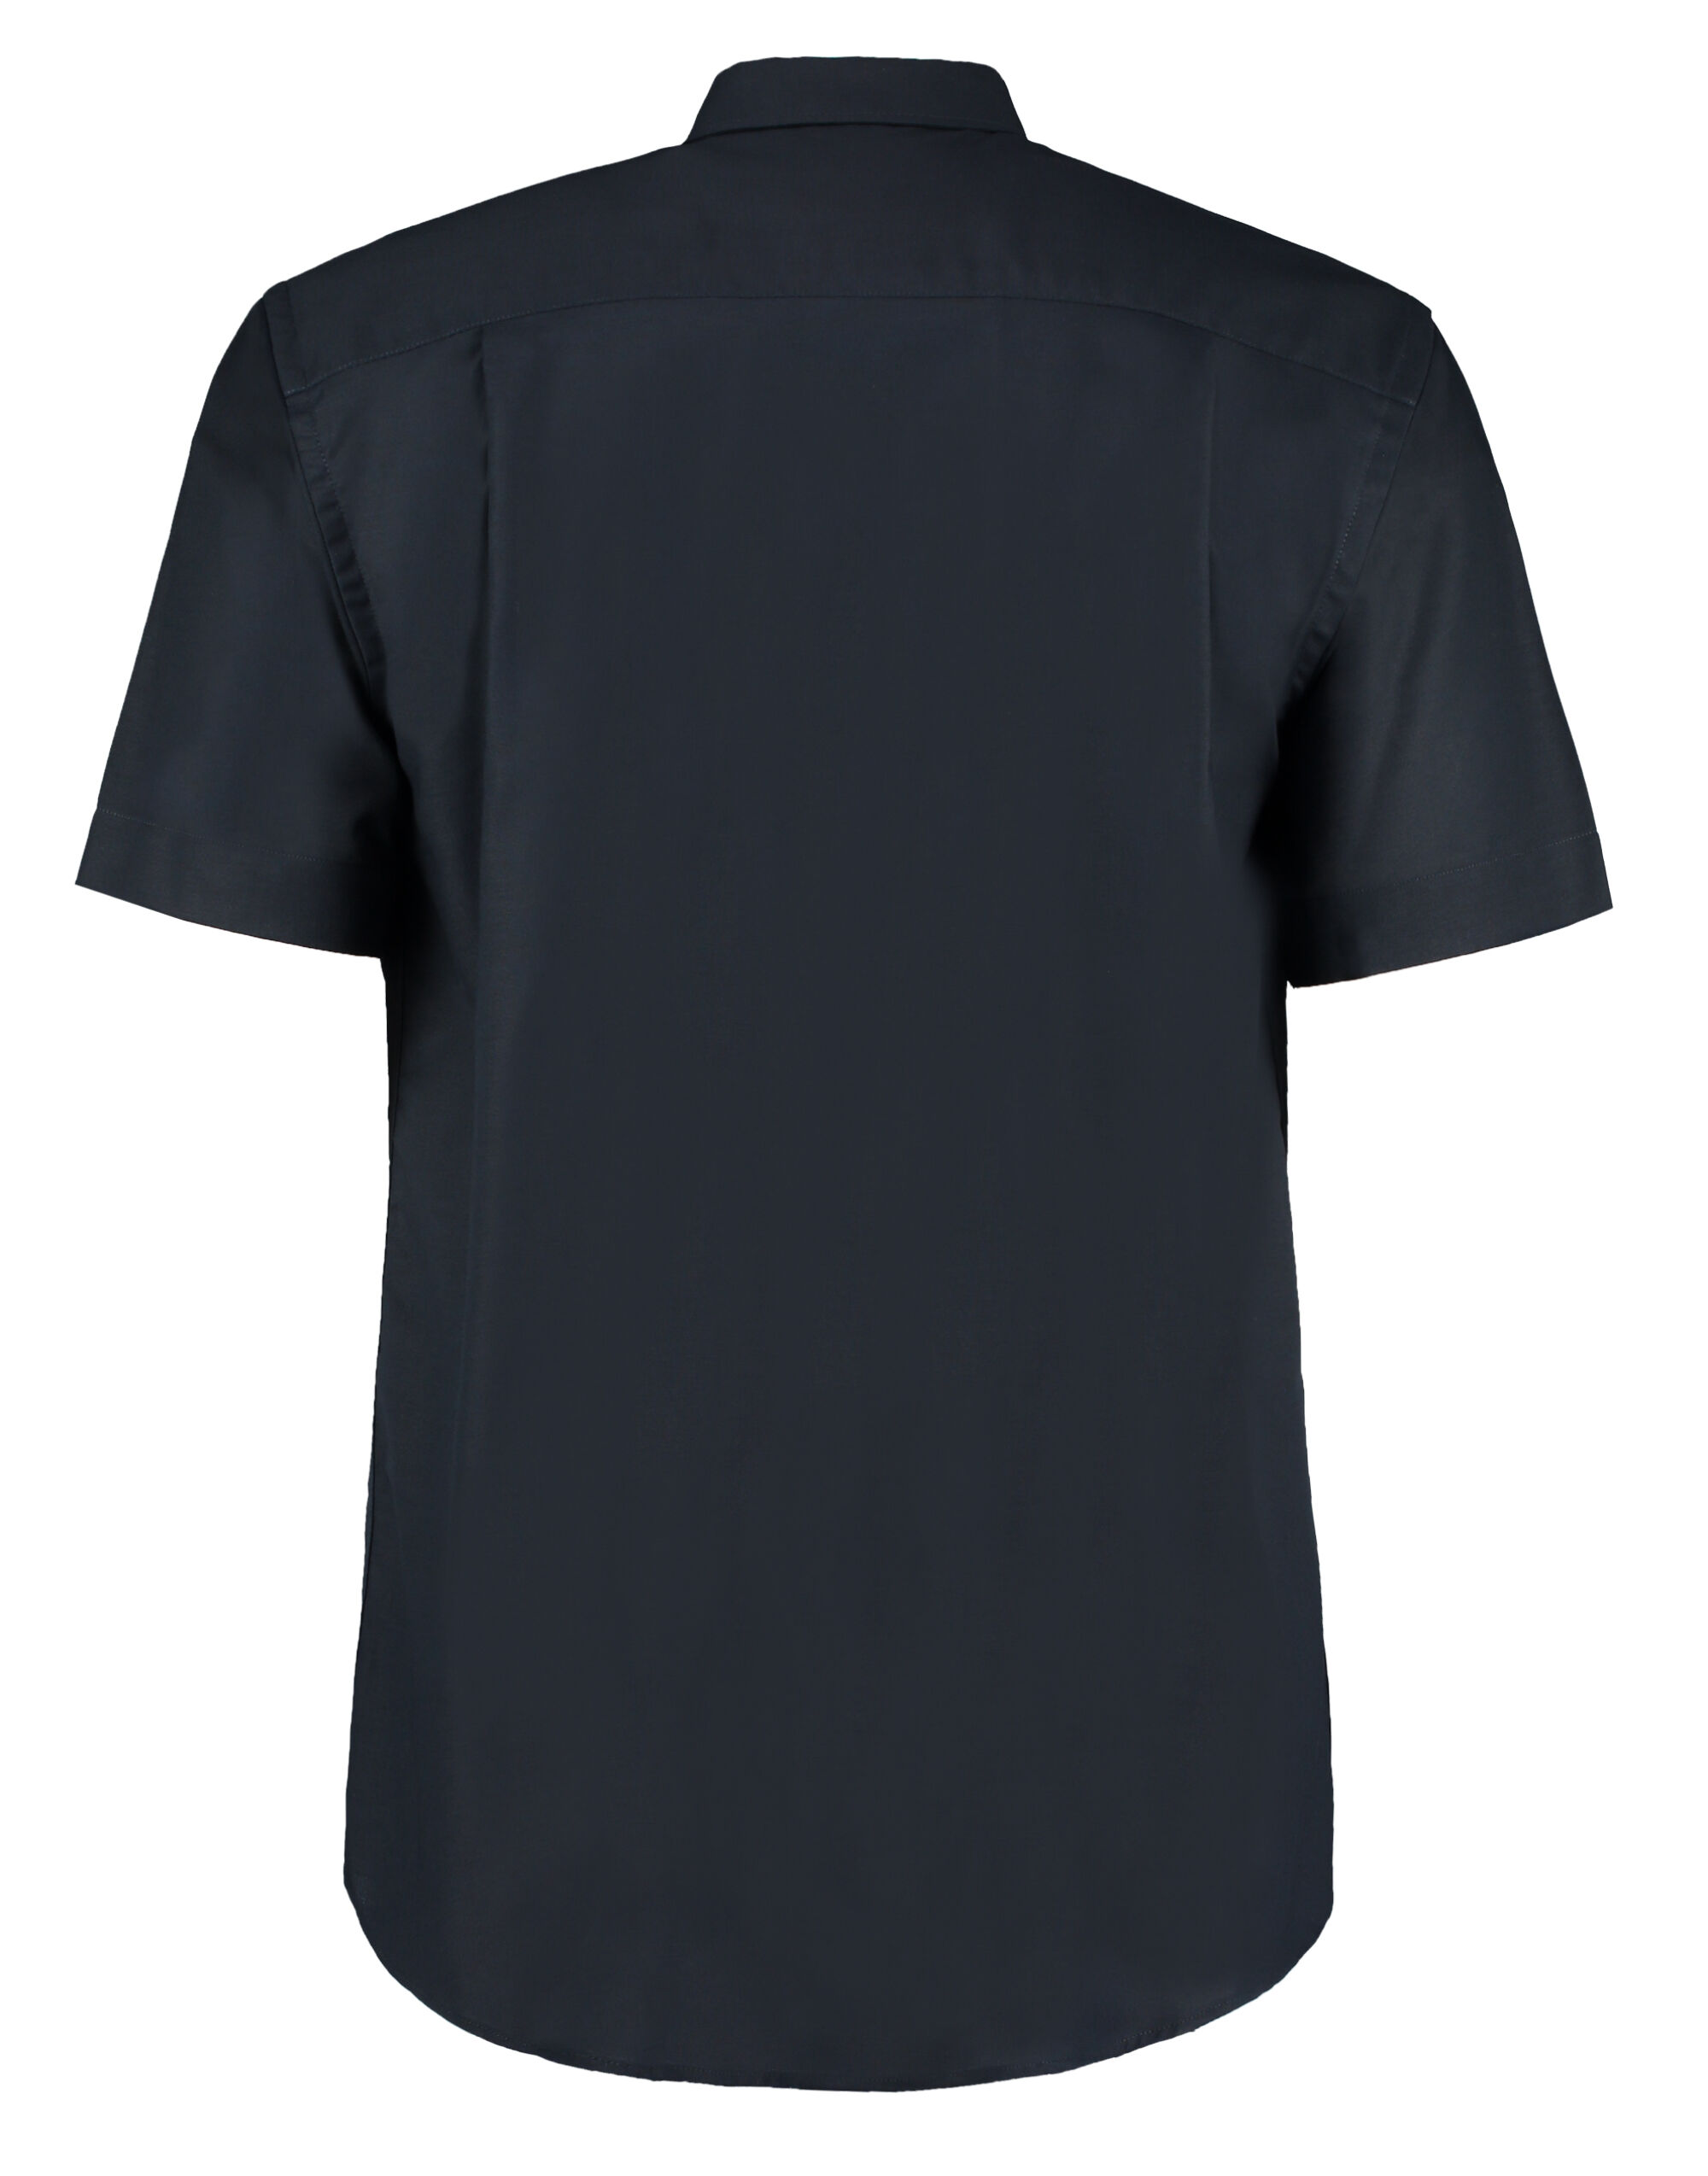 (KK350) Classic Fit Short Sleeve Workwear Oxford Shirt French Navy Neck ...